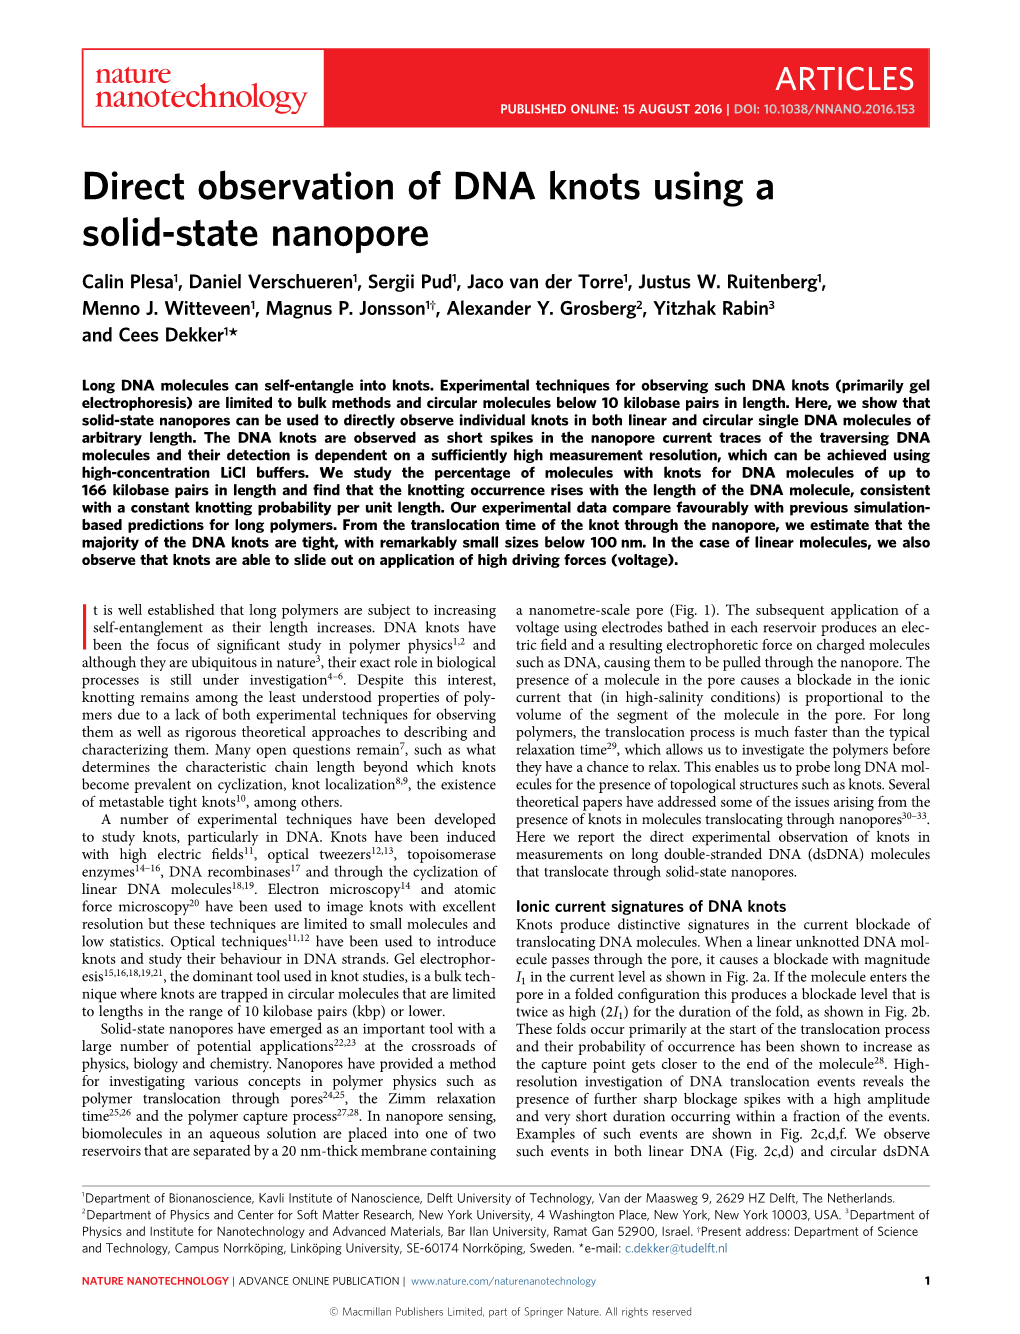 Direct Observation of DNA Knots Using a Solid-State Nanopore Calin Plesa1, Daniel Verschueren1,Sergiipud1,Jacovandertorre1, Justus W